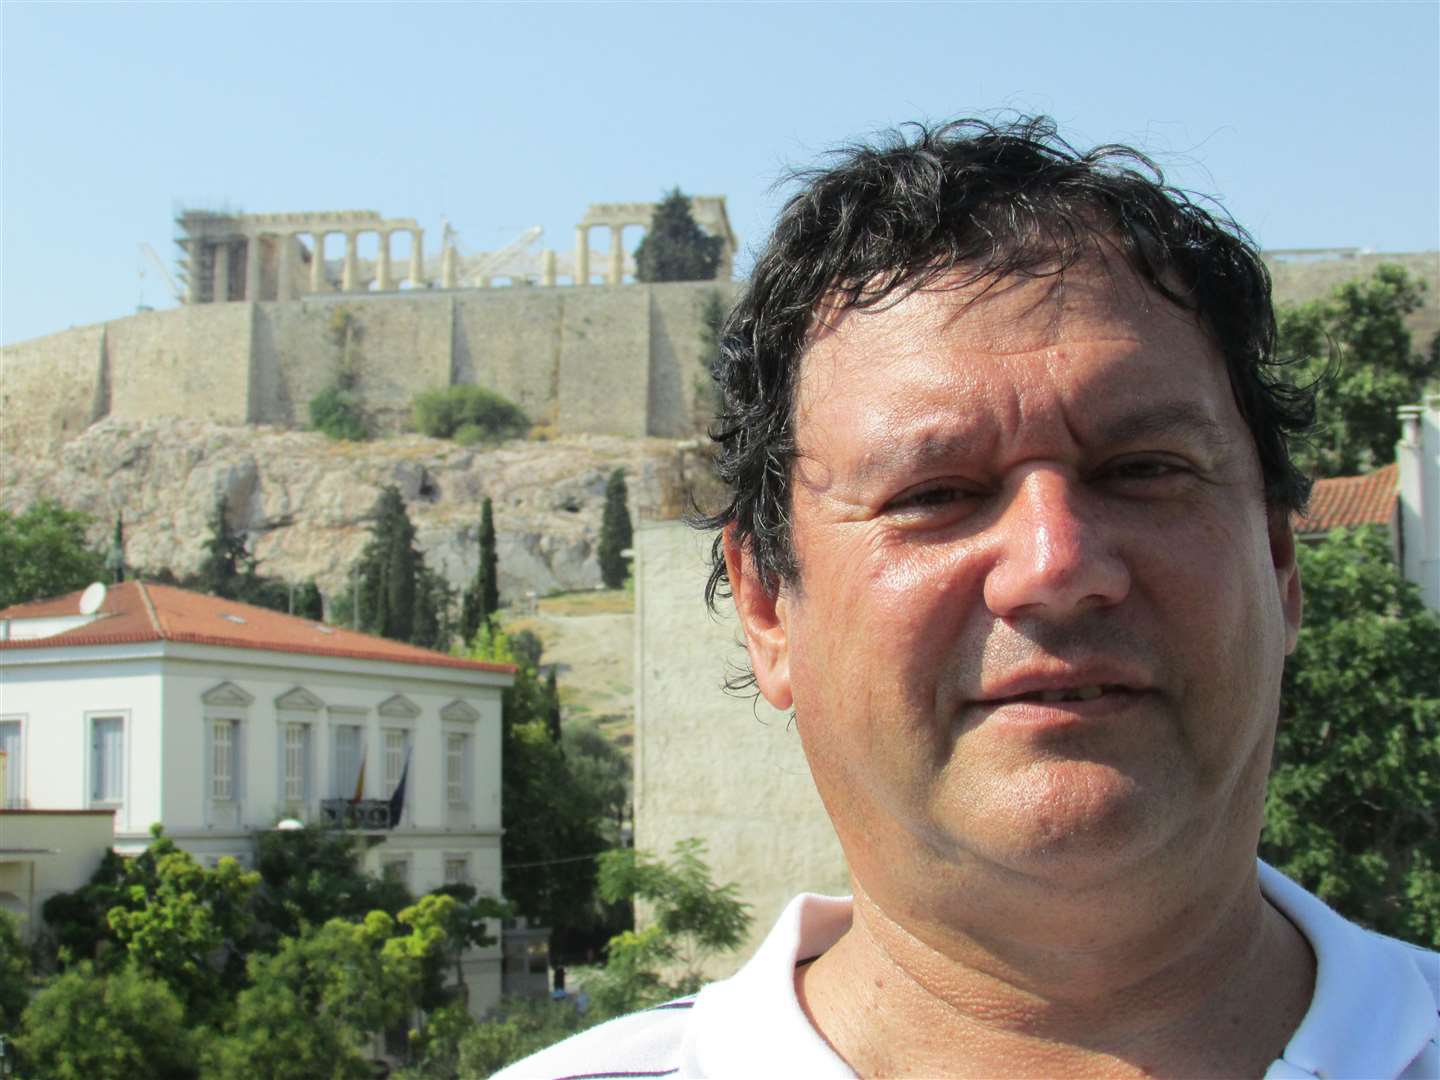 Miltos Petridis in home city of Athens